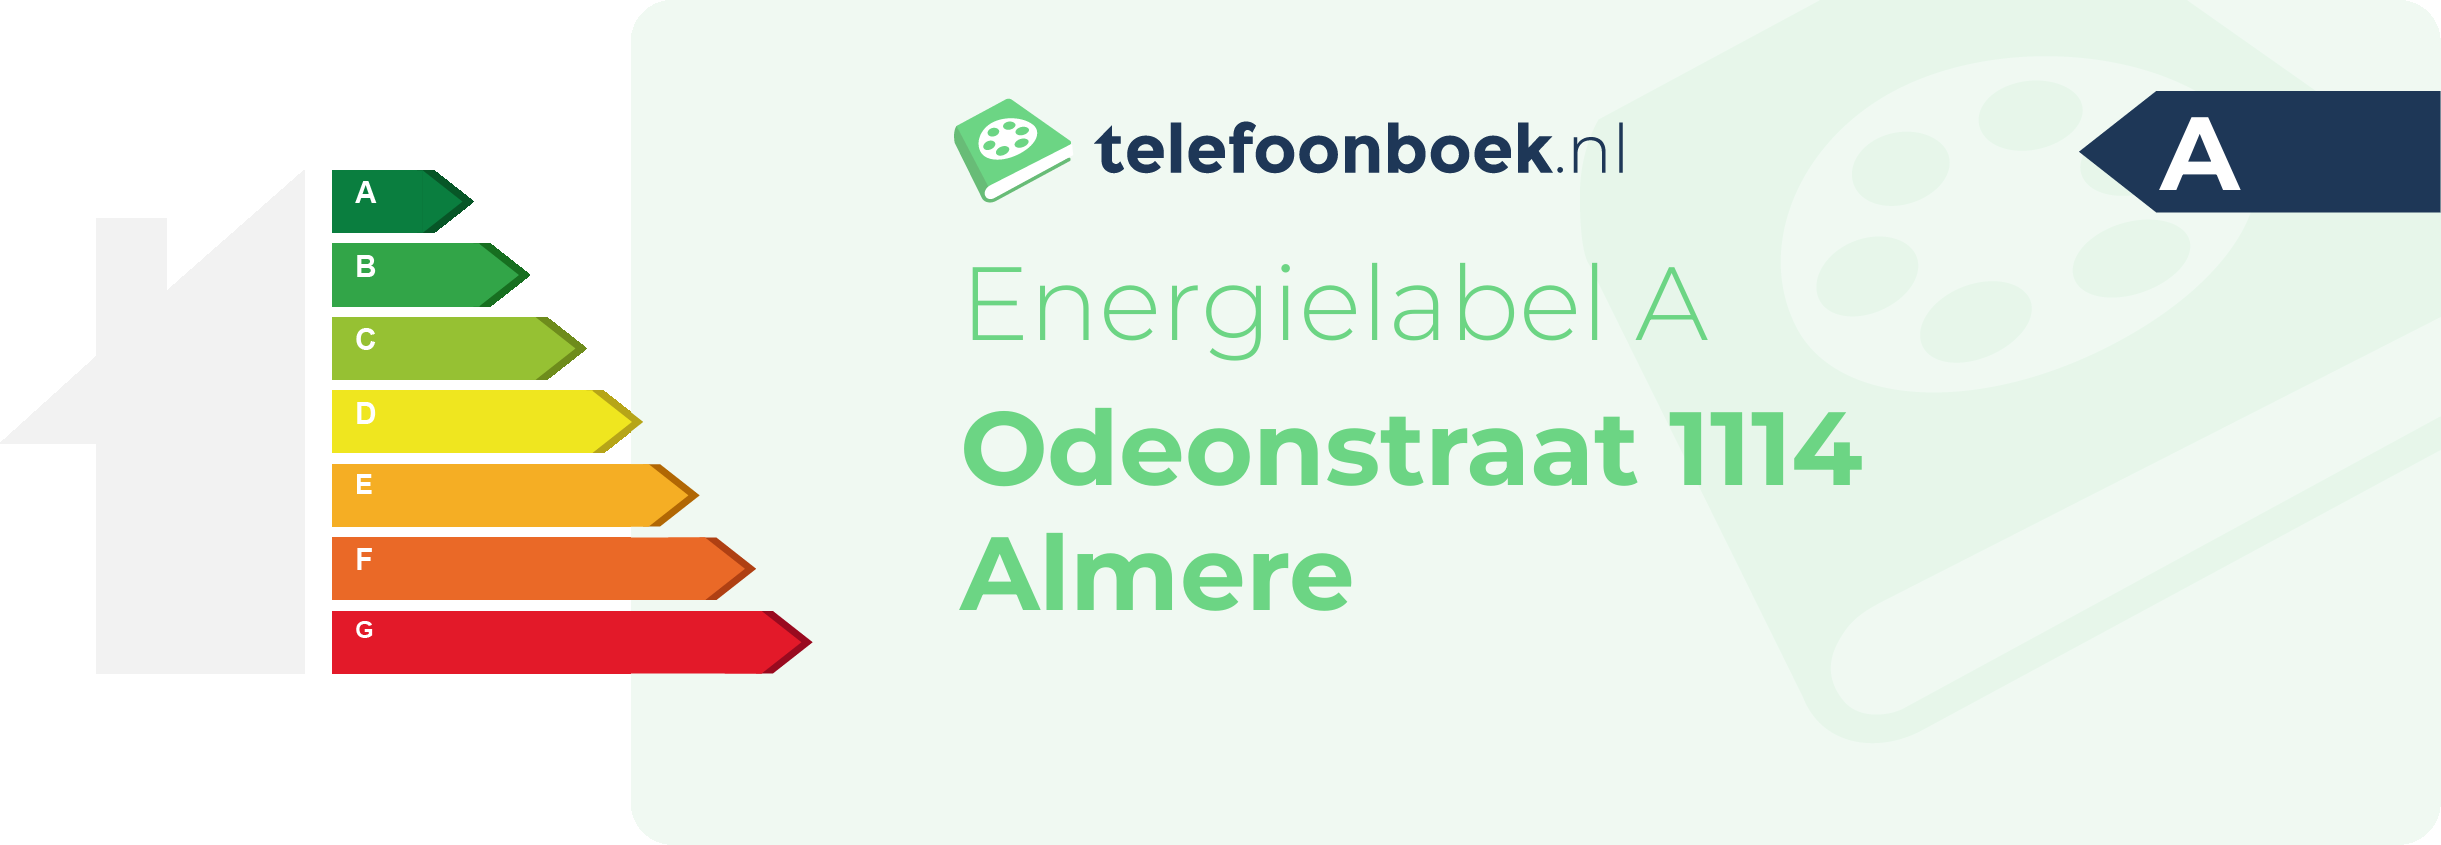 Energielabel Odeonstraat 1114 Almere